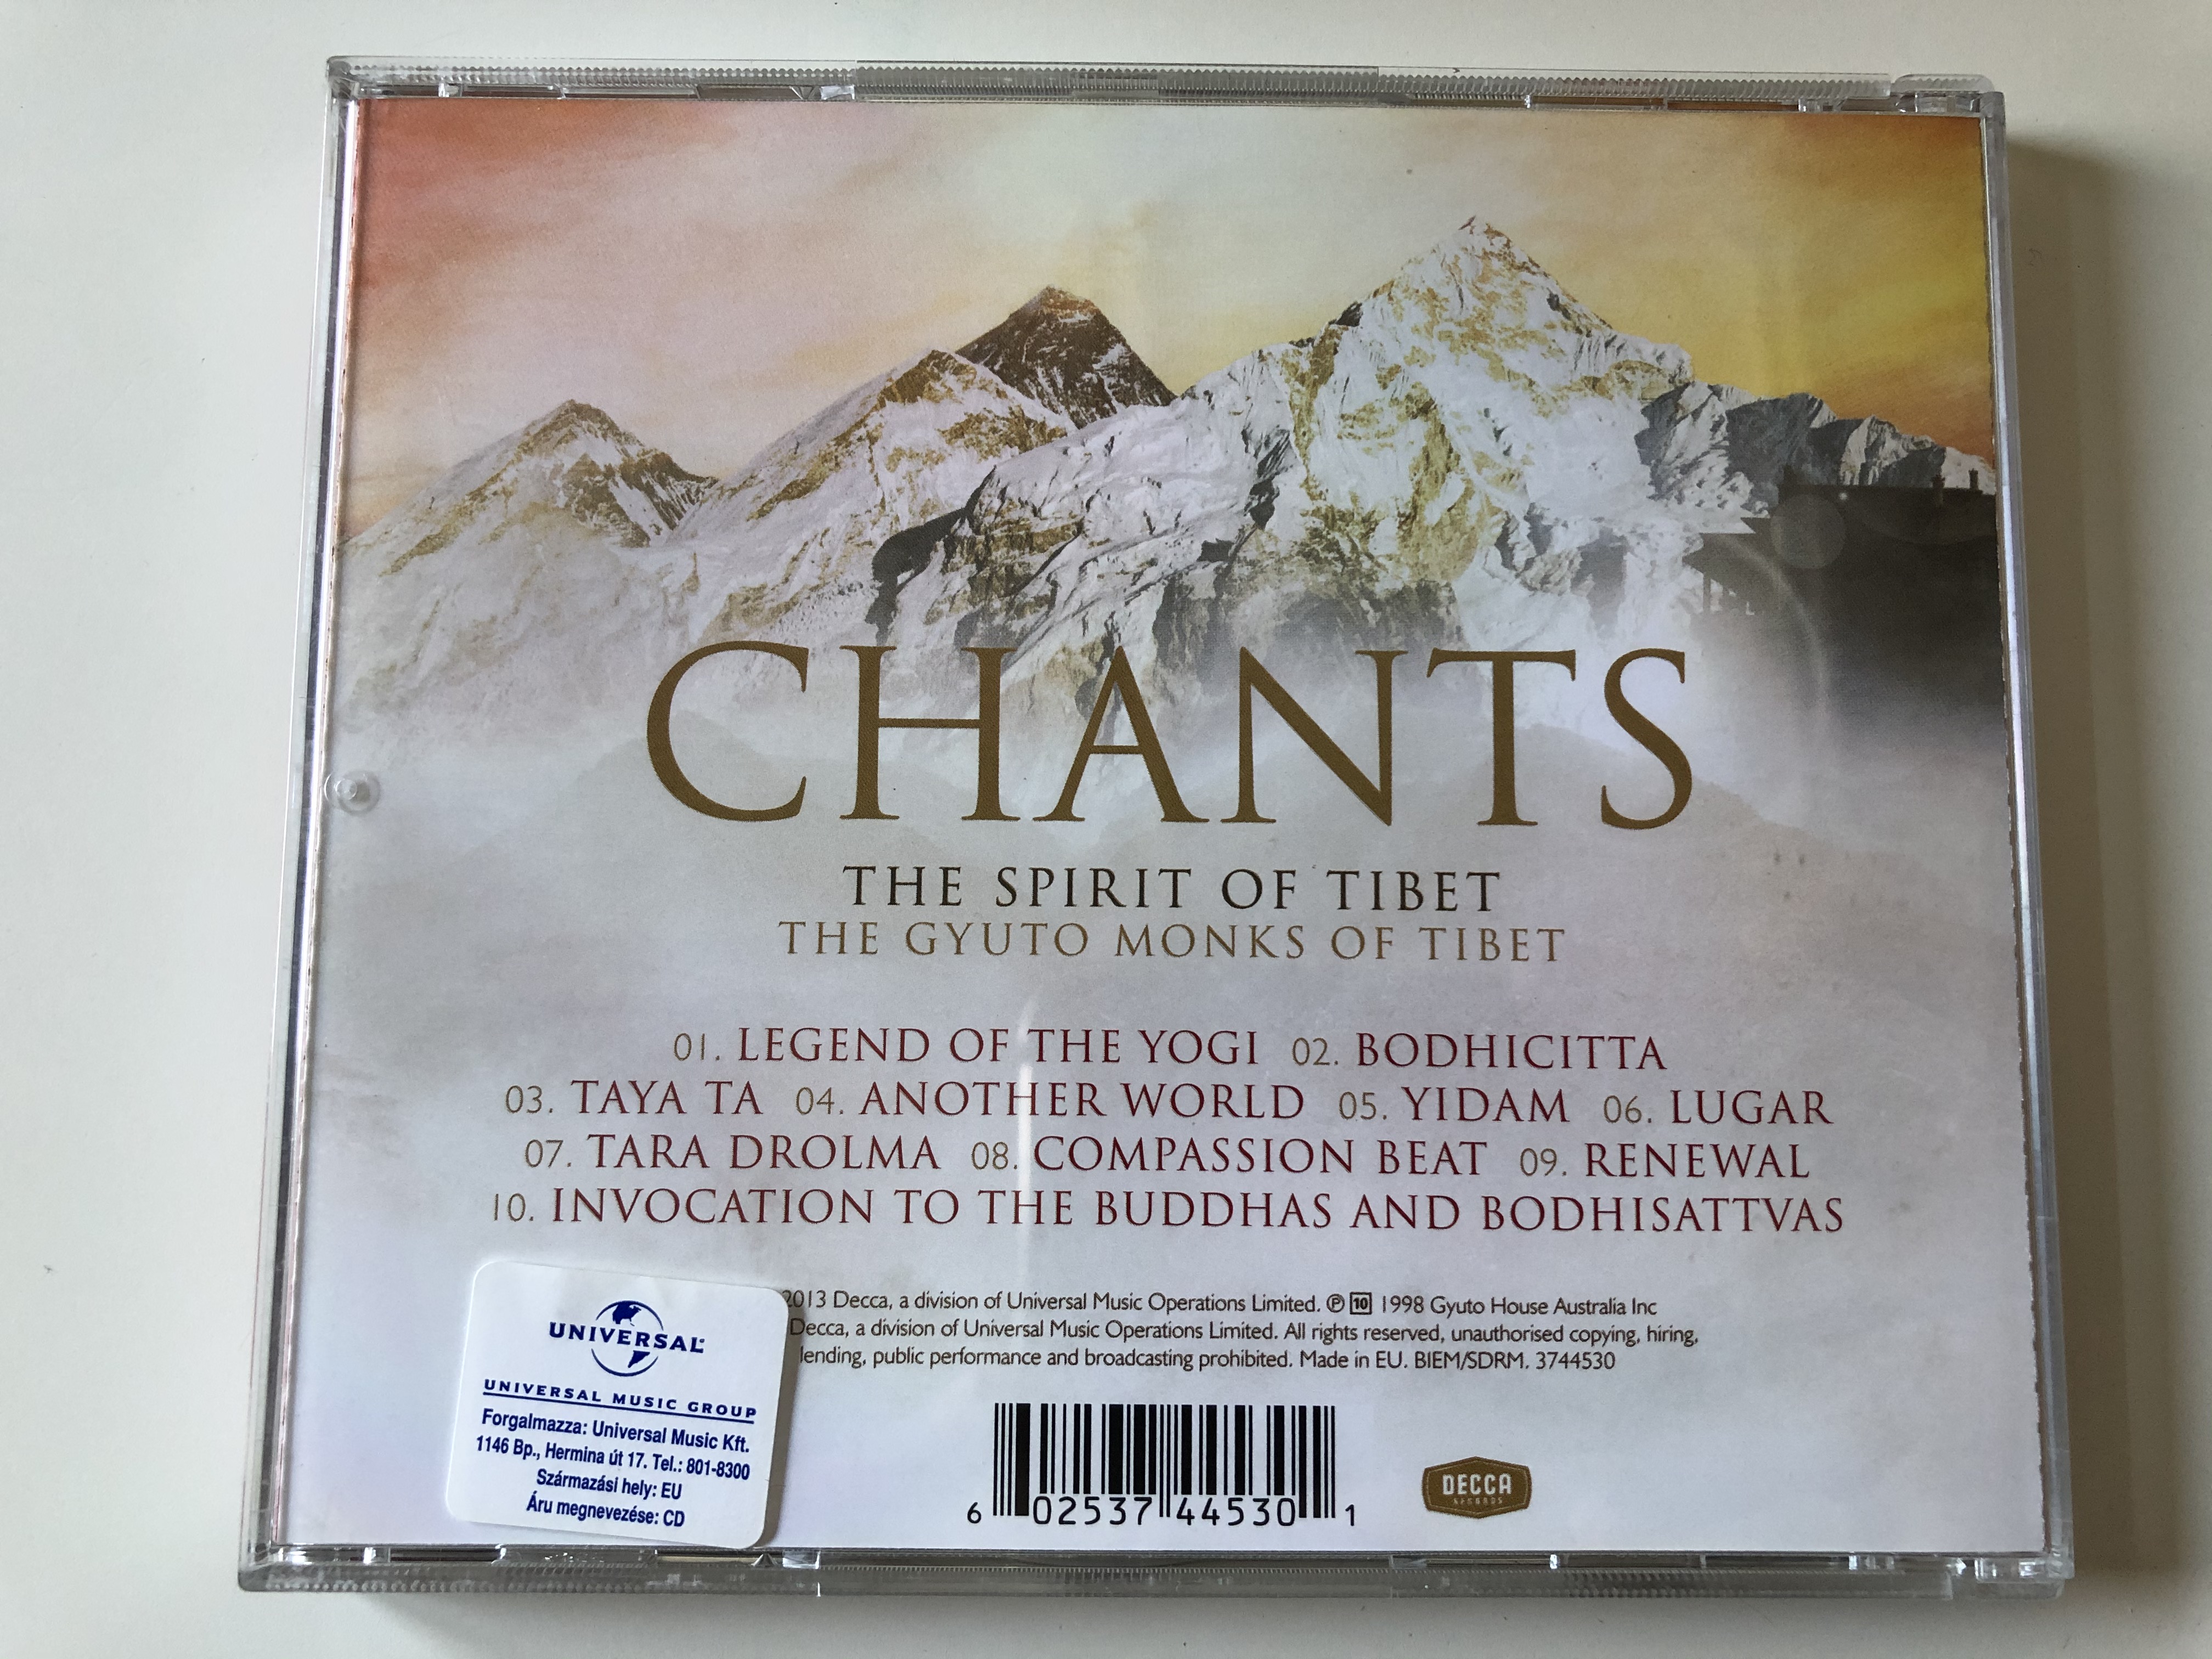 chants-the-spirit-of-tibet-the-gyuto-monks-of-tibet-decca-audio-cd-2013-3744530-7-.jpg